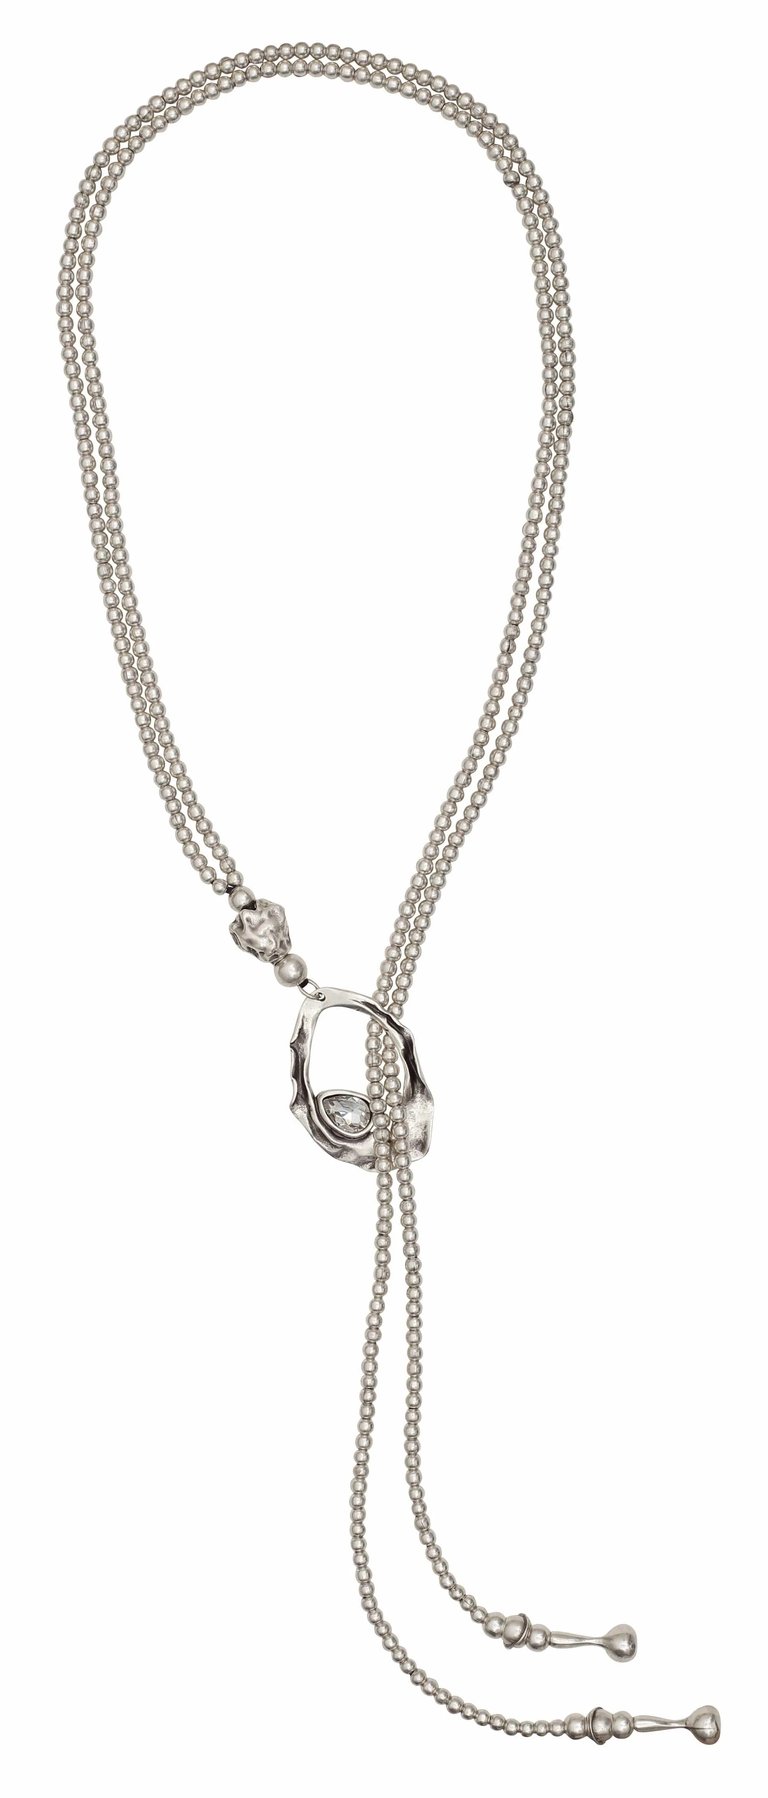 Jelavu Pewter Lariat Necklace - Silver